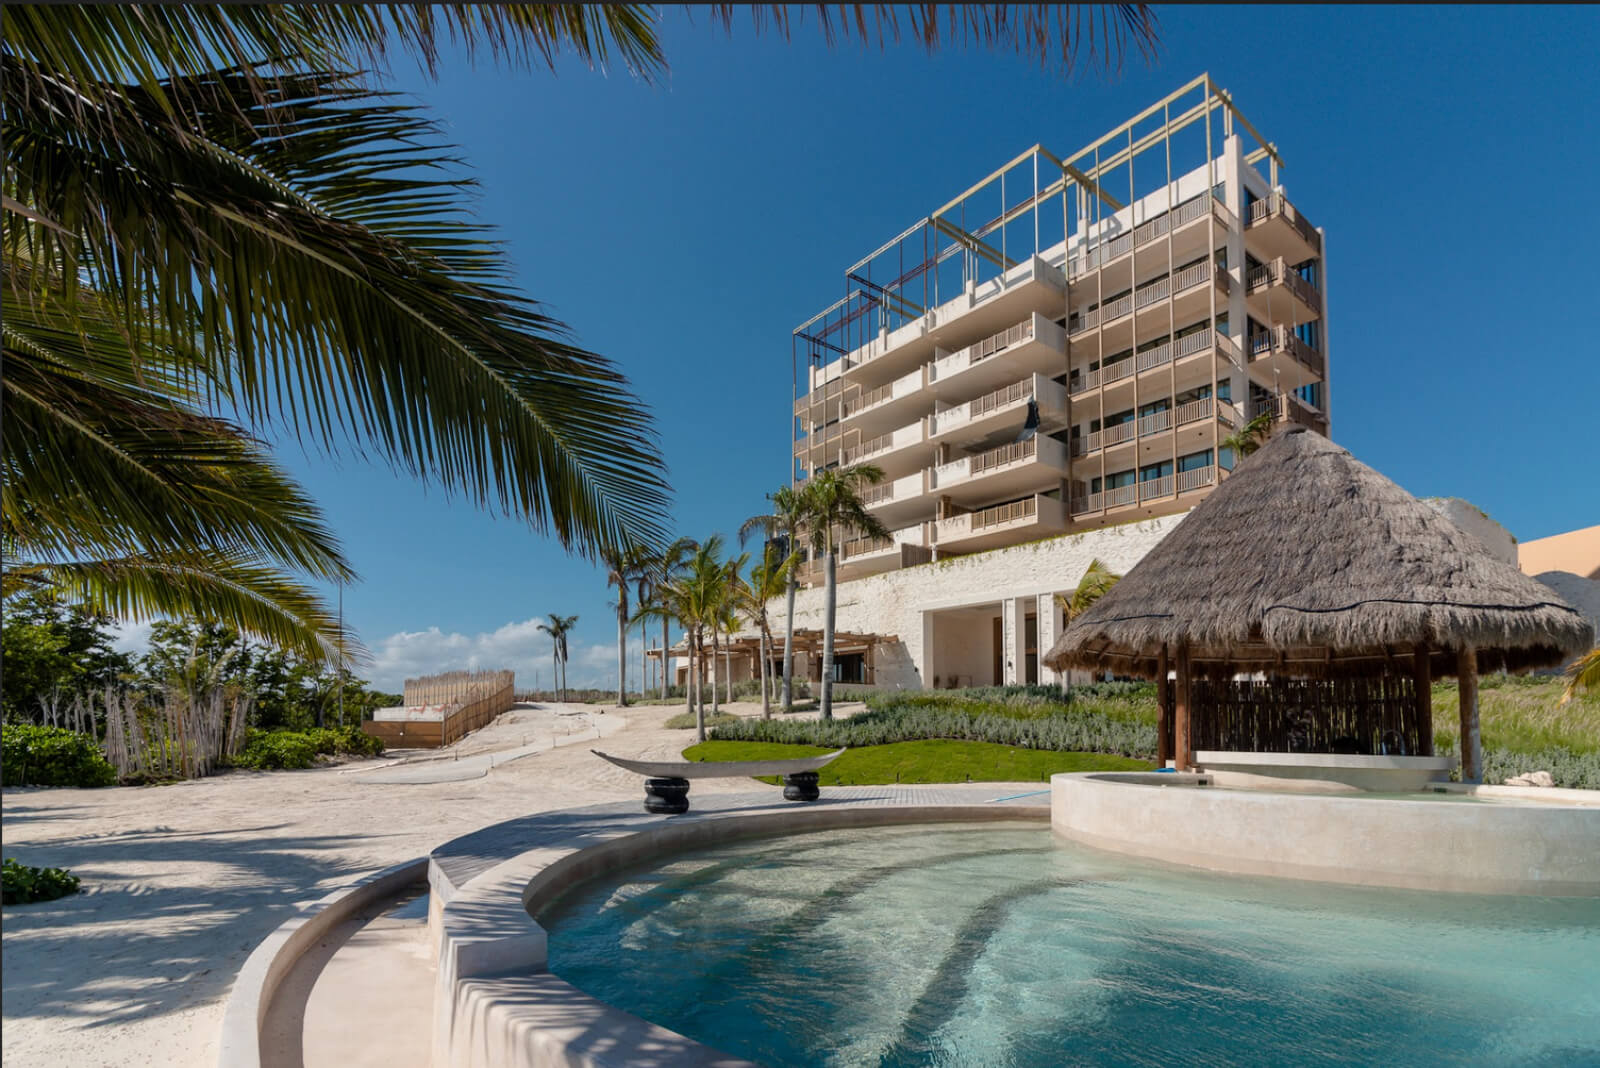 Penthouse frente al mar, con alberca, pre-venta Playa del Carmen.